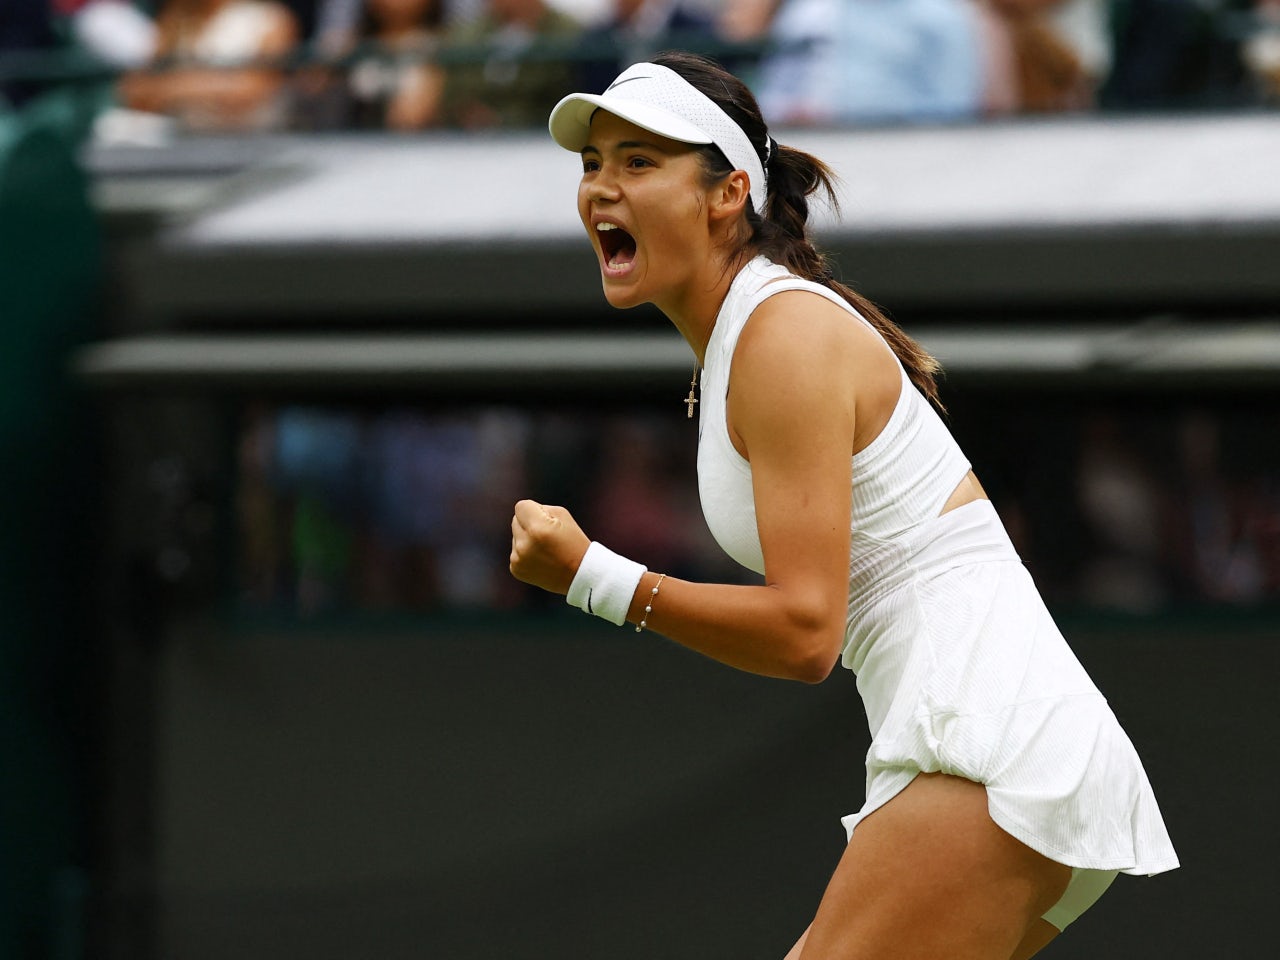 Wimbledon: Emma Raducanu basks in crowd adulation after reaching third round